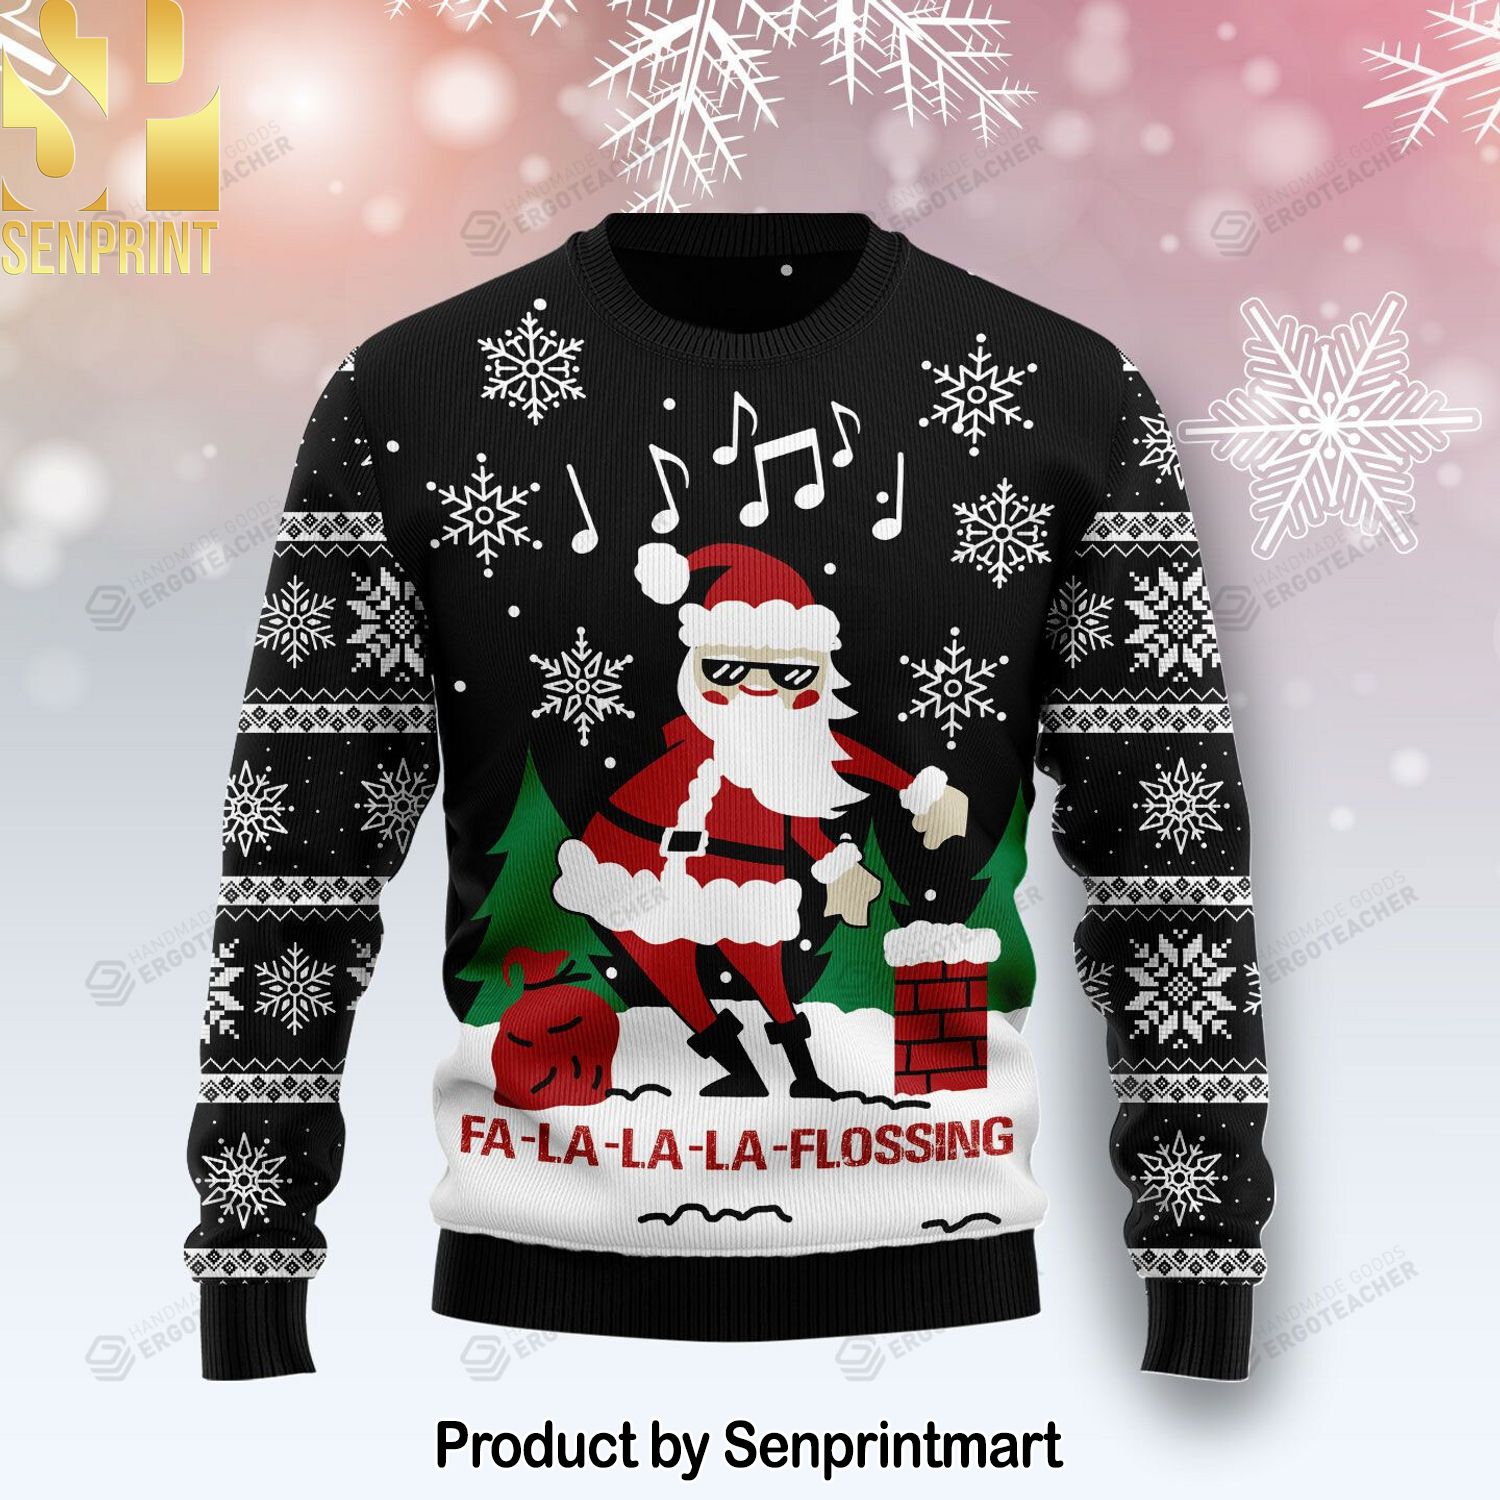 La-La-La Flossing Santa Claus 3D Printed Ugly Christmas Sweater